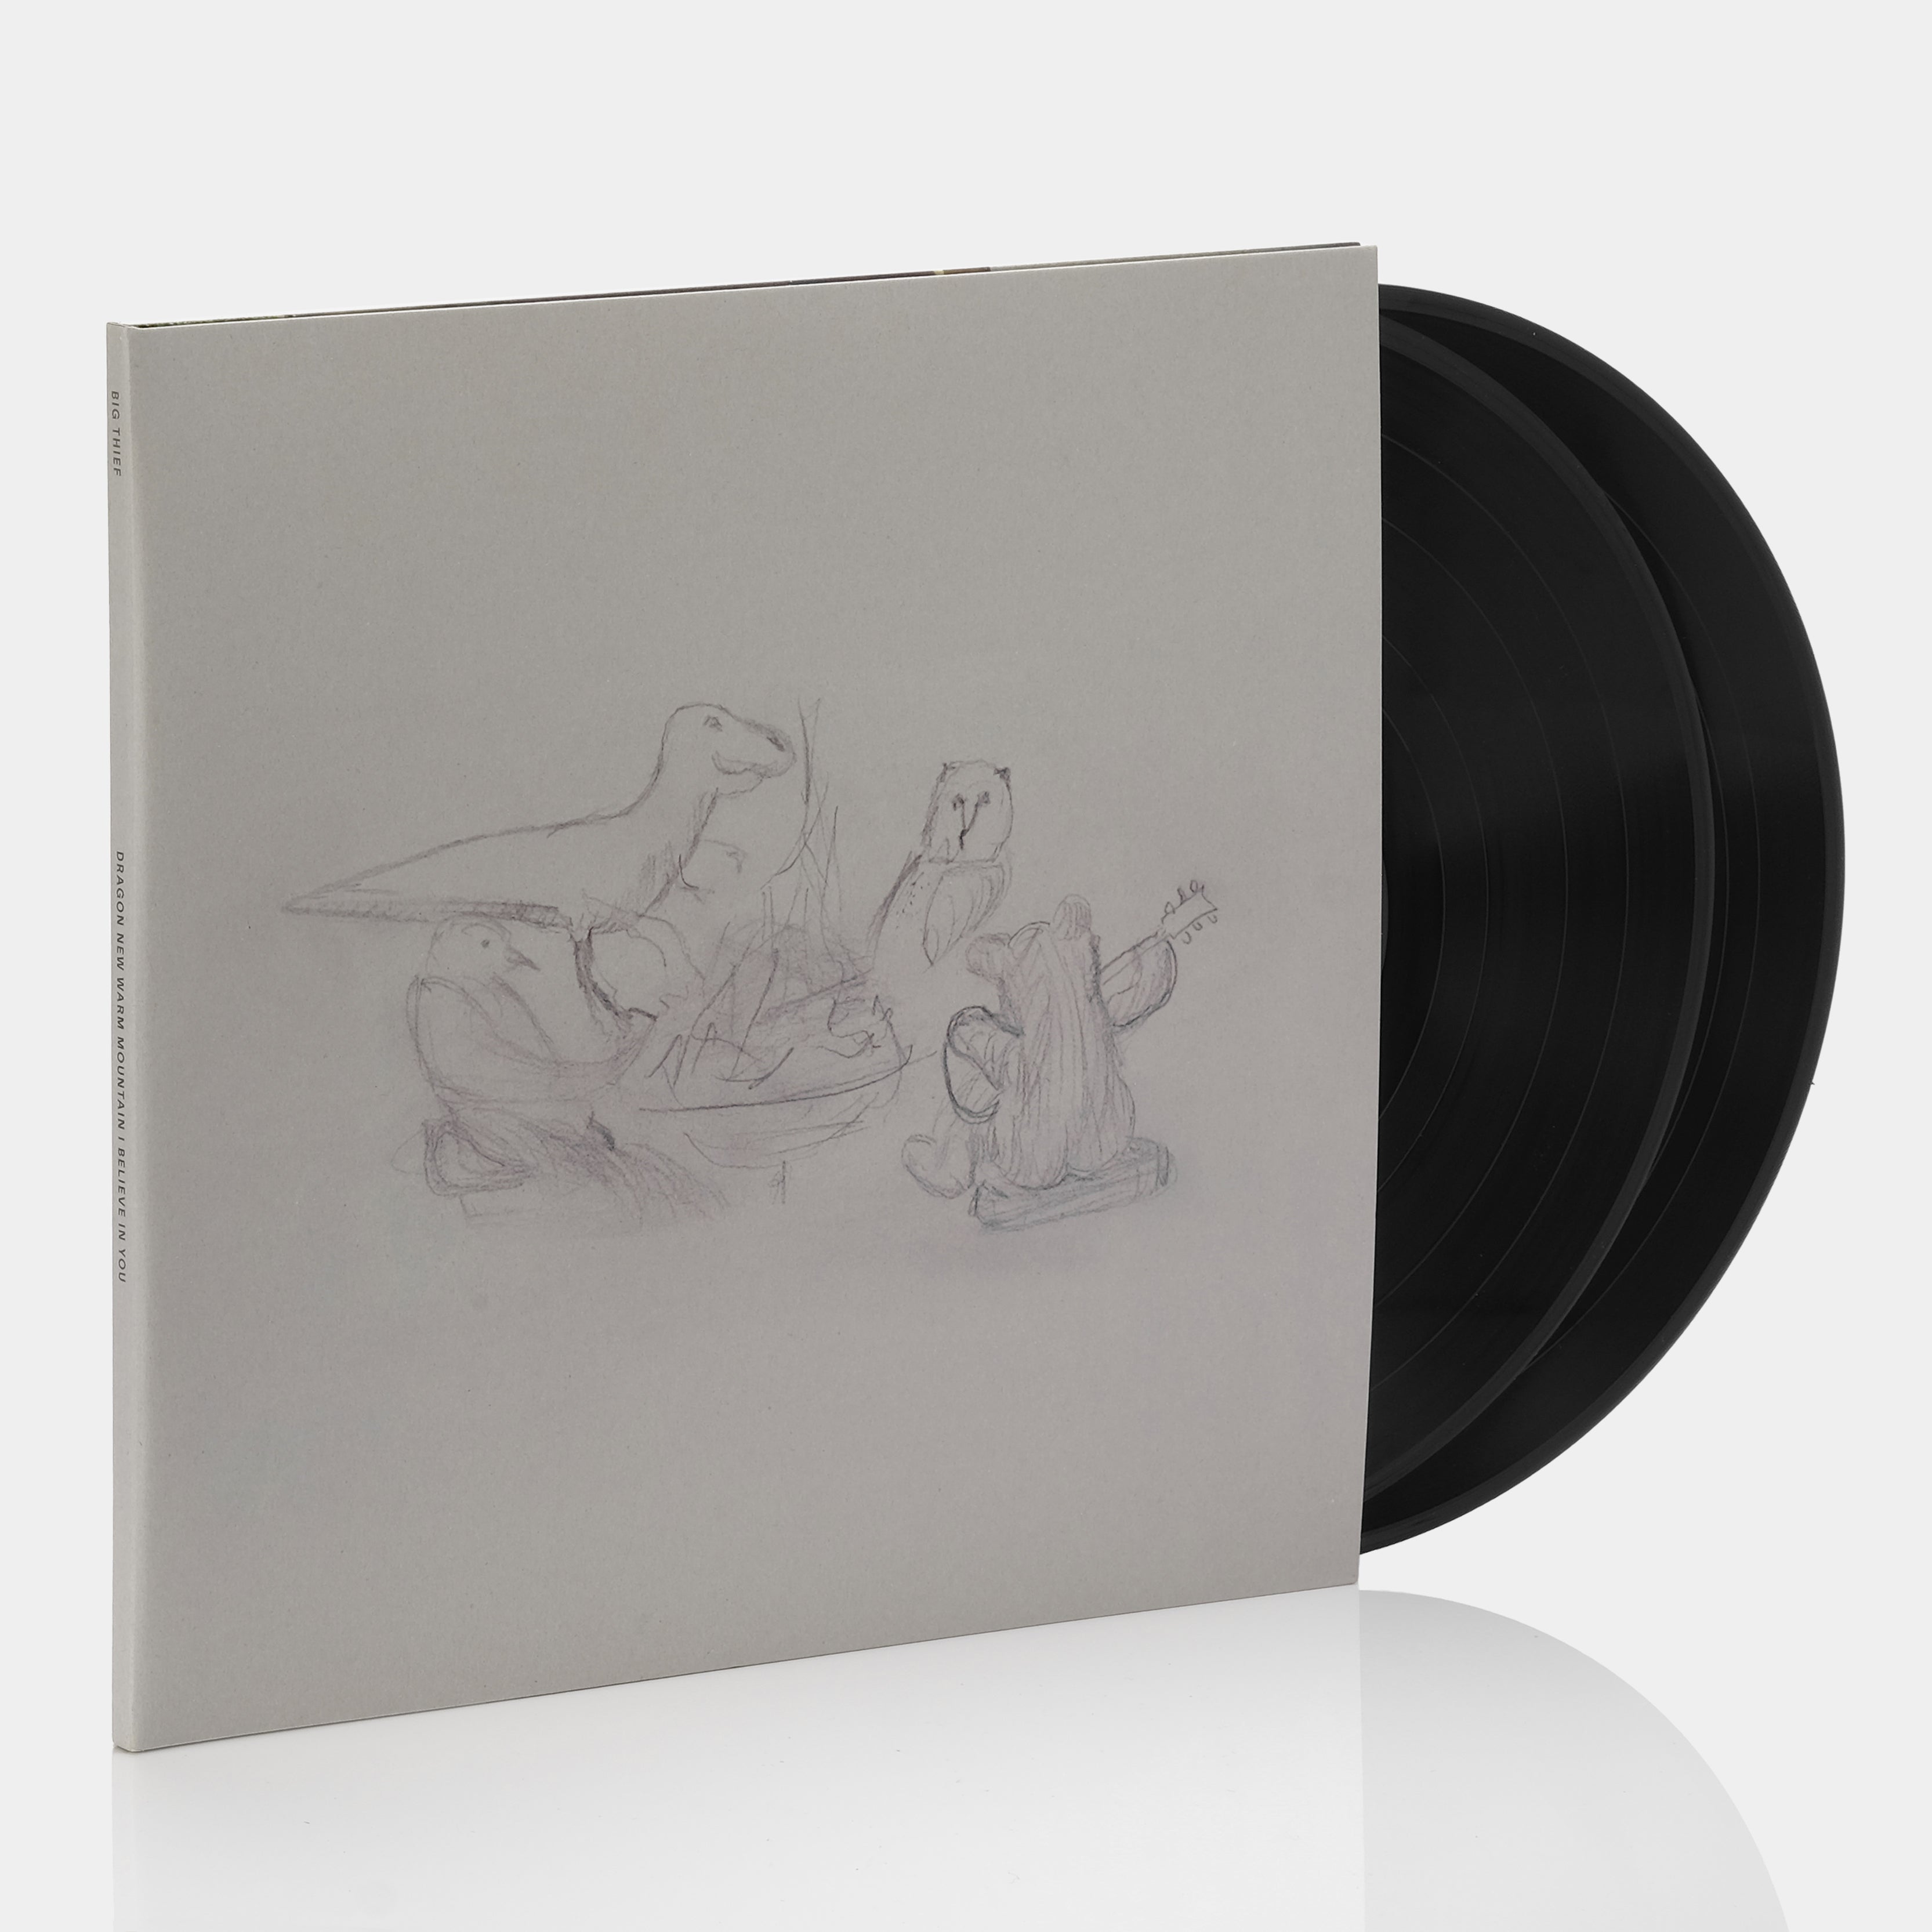 Big Thief - Dragon New Warm Mountain I Believe In You 2xLP Vinyl Record